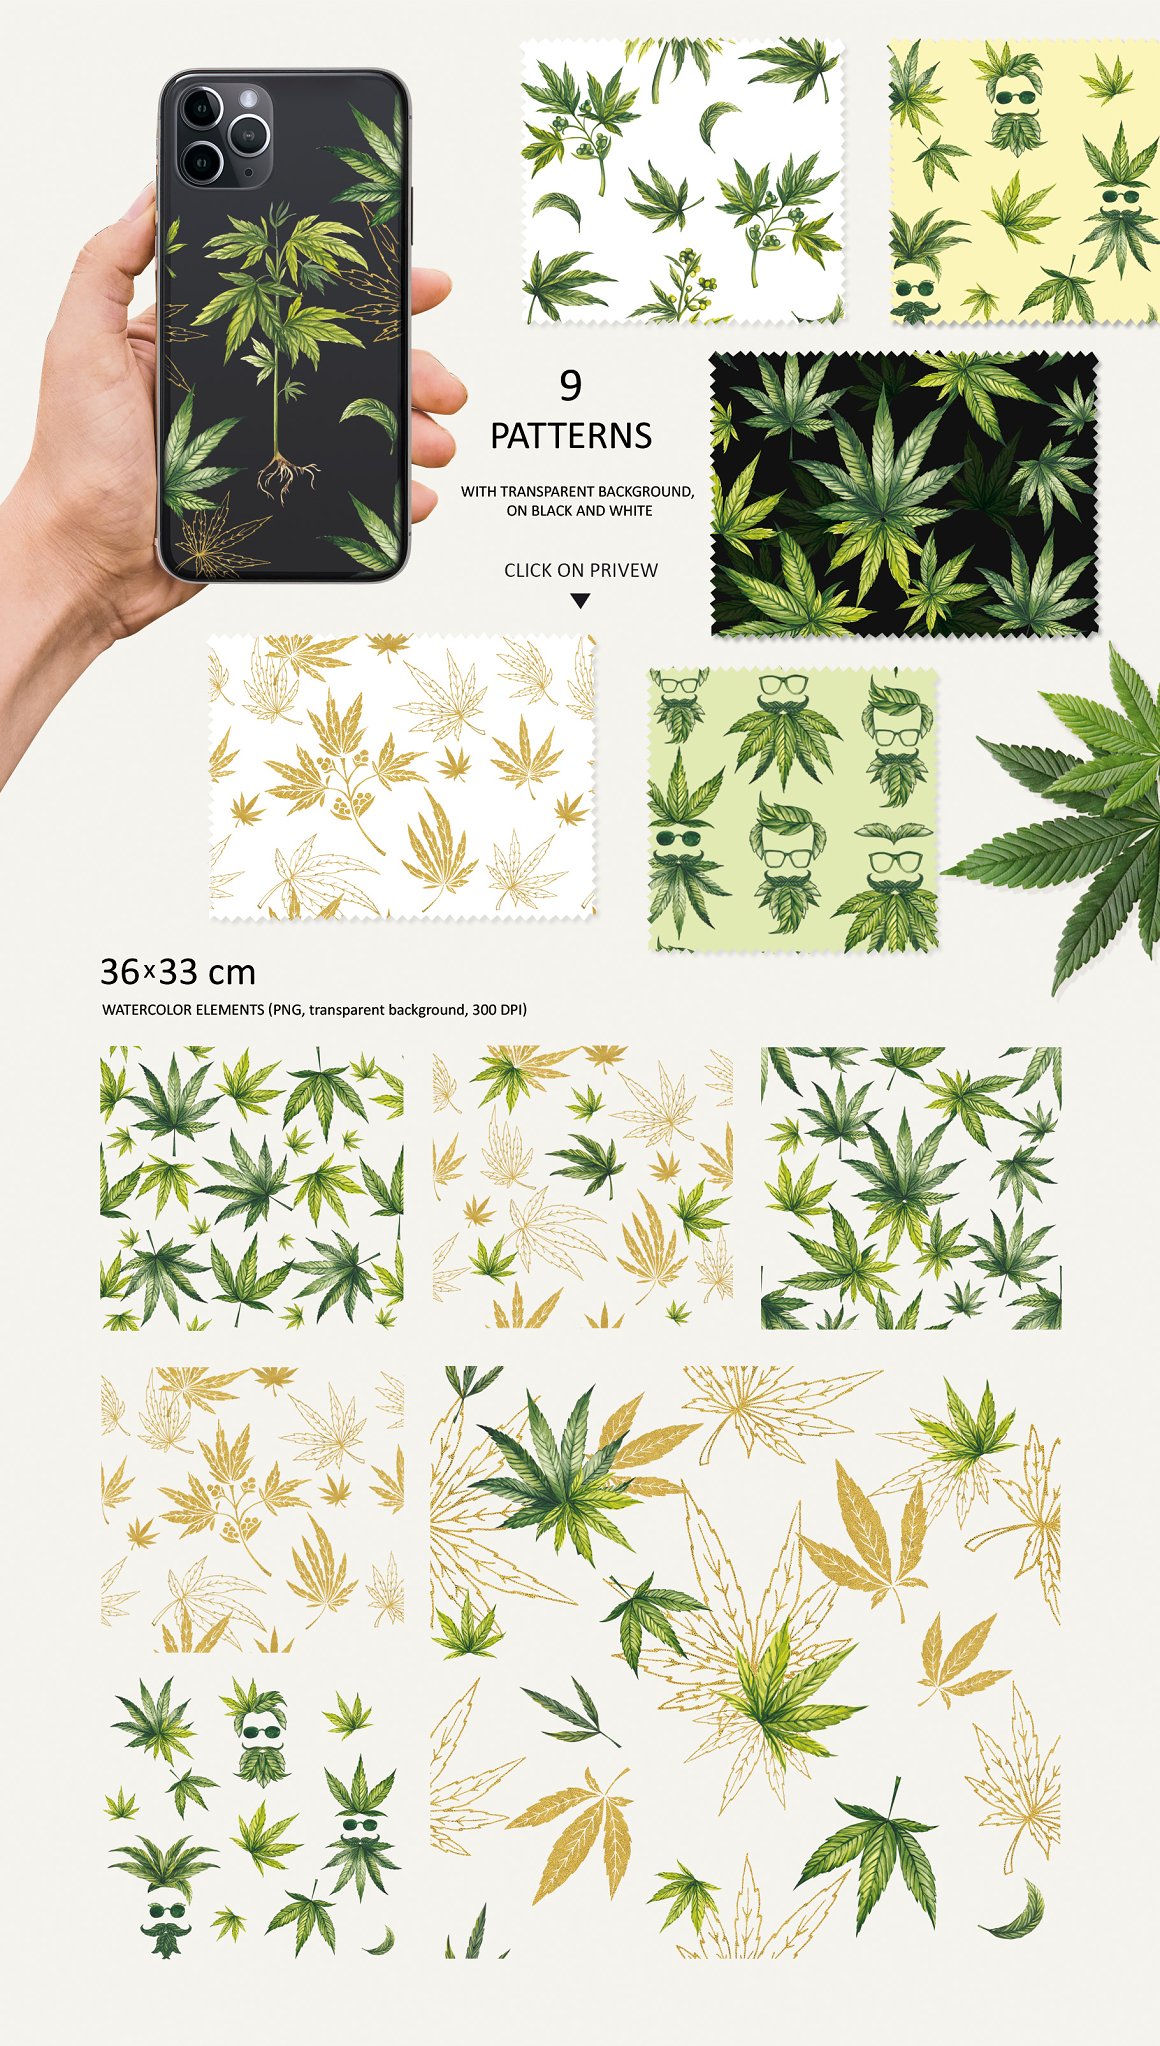 9 Patterns Watercolor Botanical Cannabis.